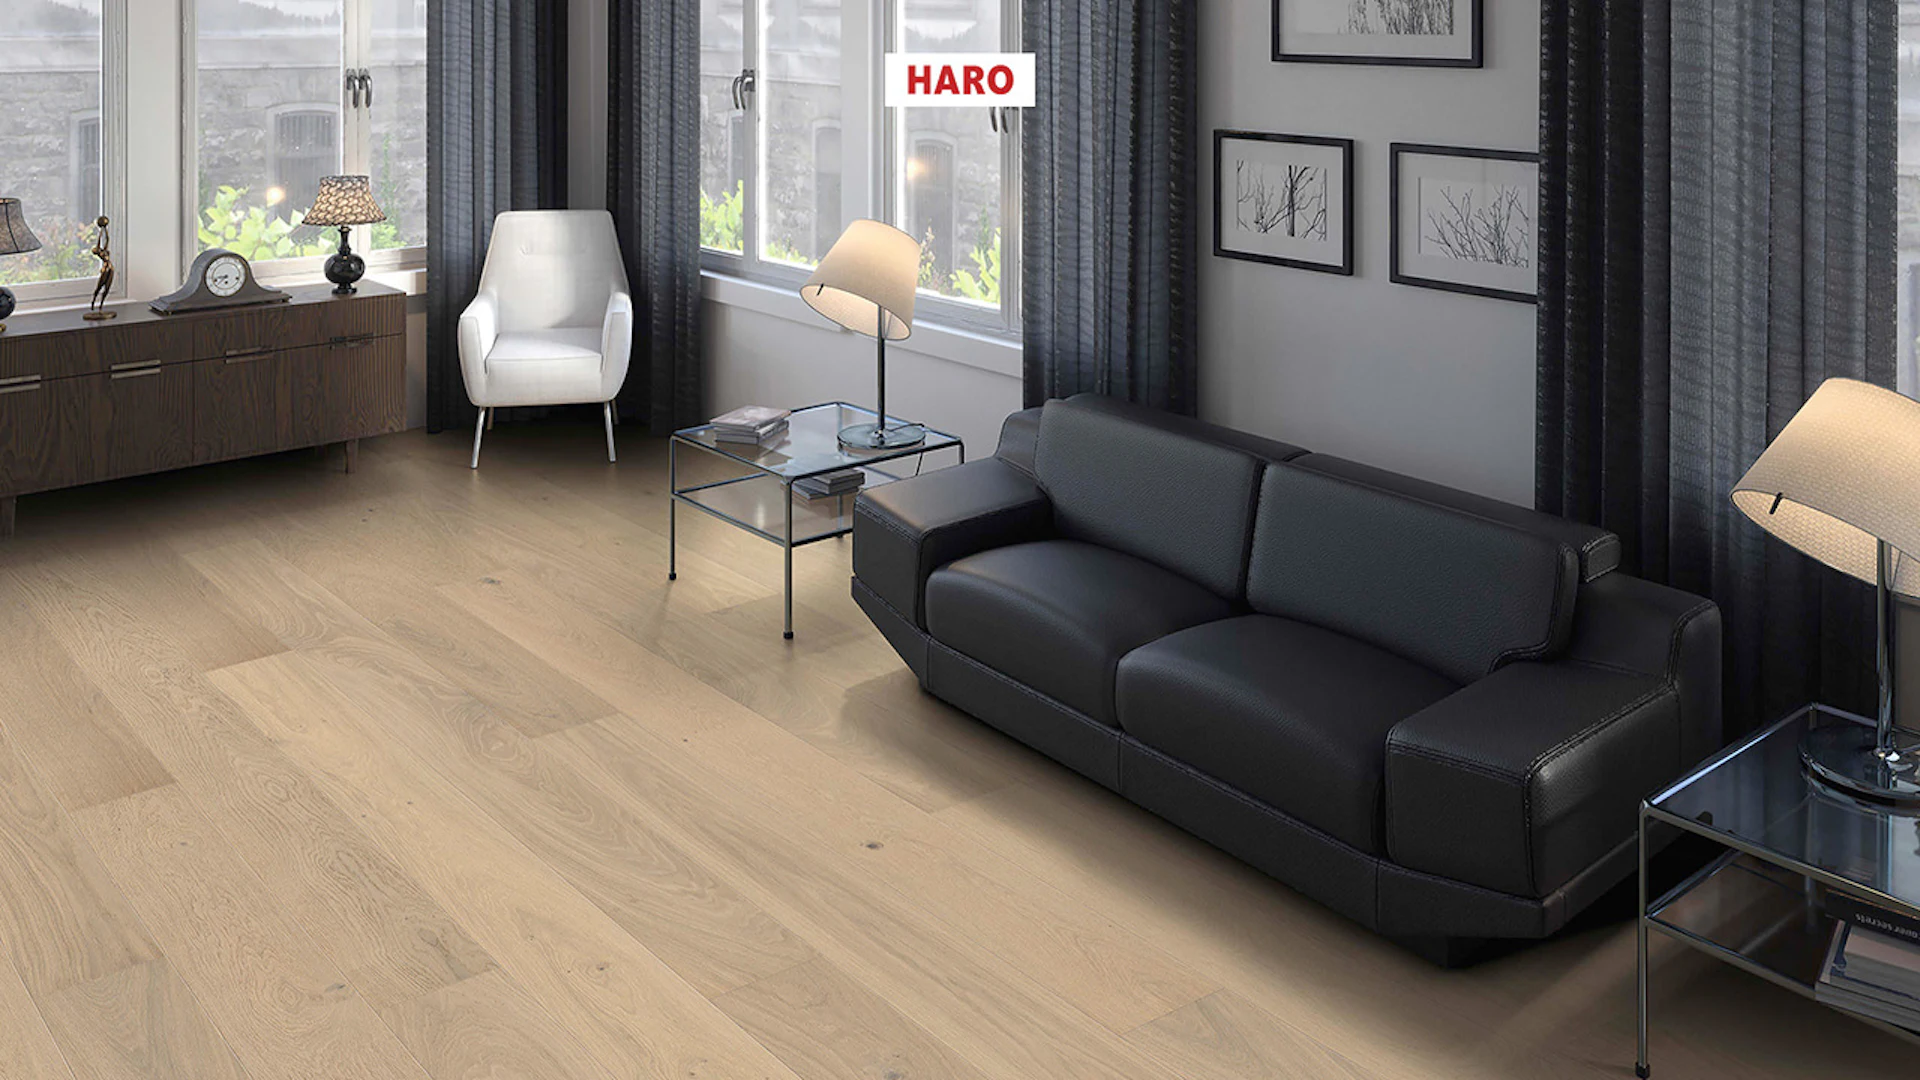 Haro Parquet Flooring - Series 4000 NF Stab LA Maxim 4V naturaLin plus Oak light white Markant (540990)